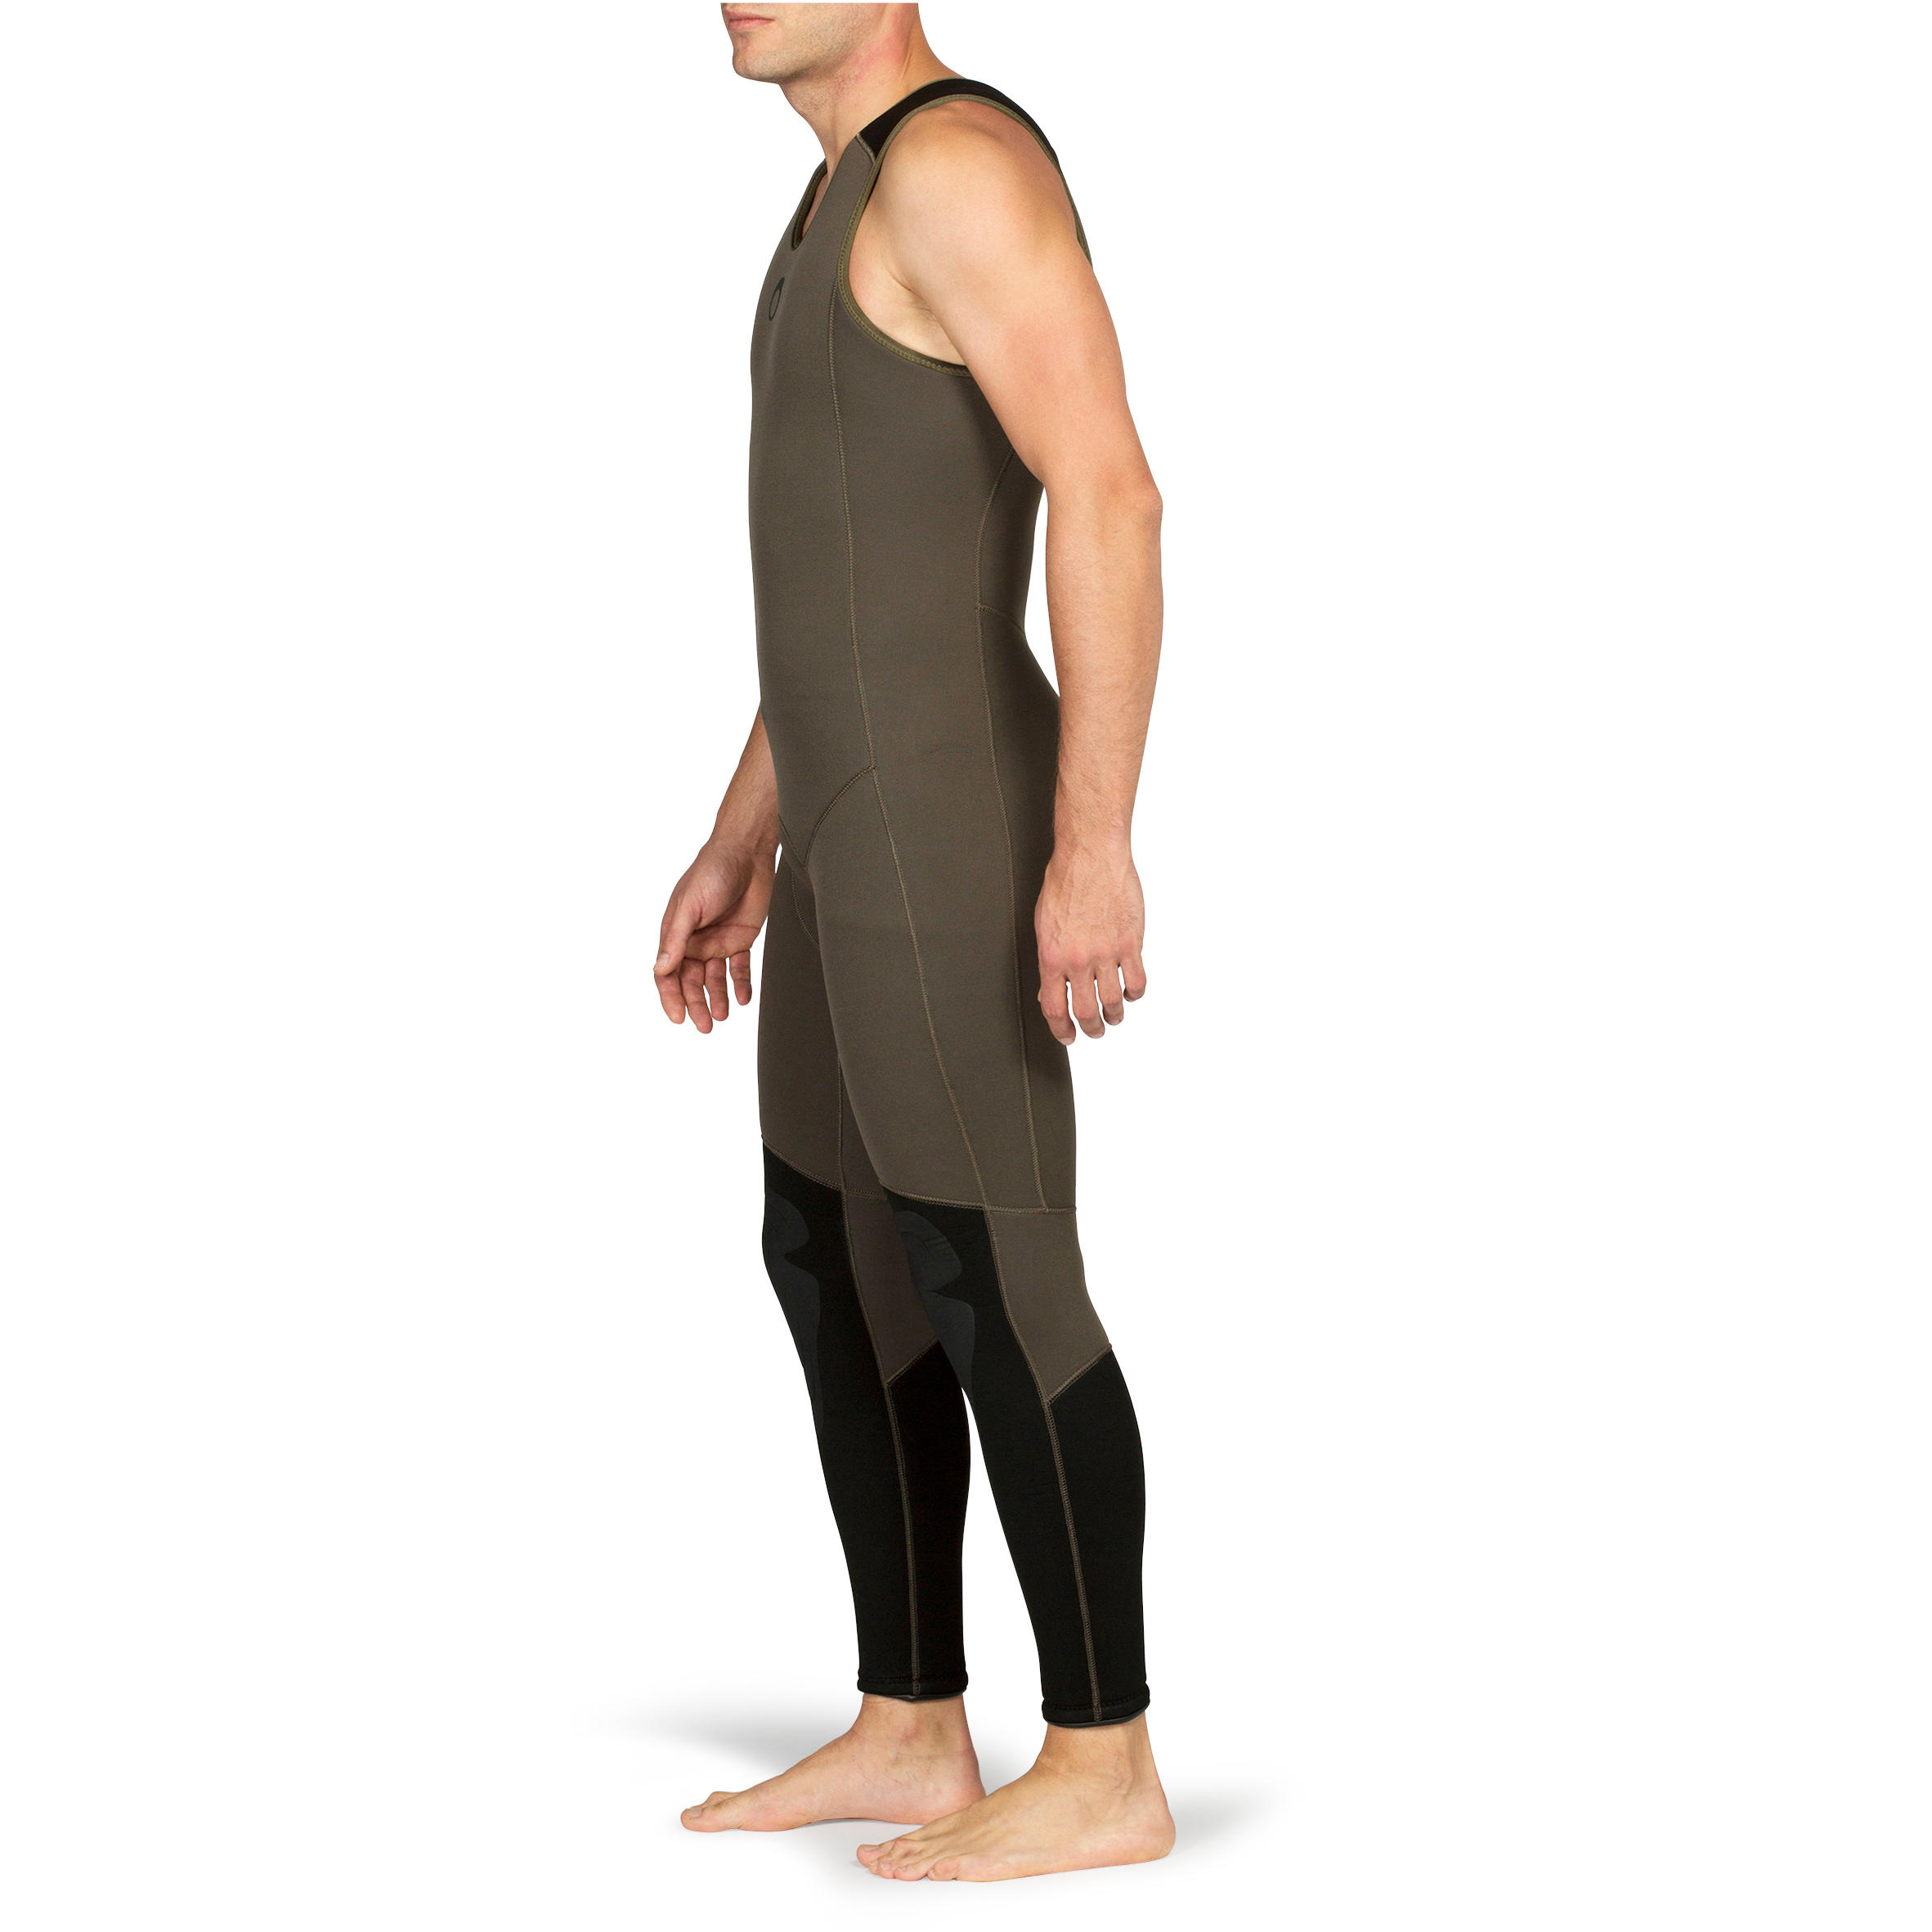 Men's spearfishing sleeveless wetsuit 7 mm neoprene SPF 500 khaki 5/13